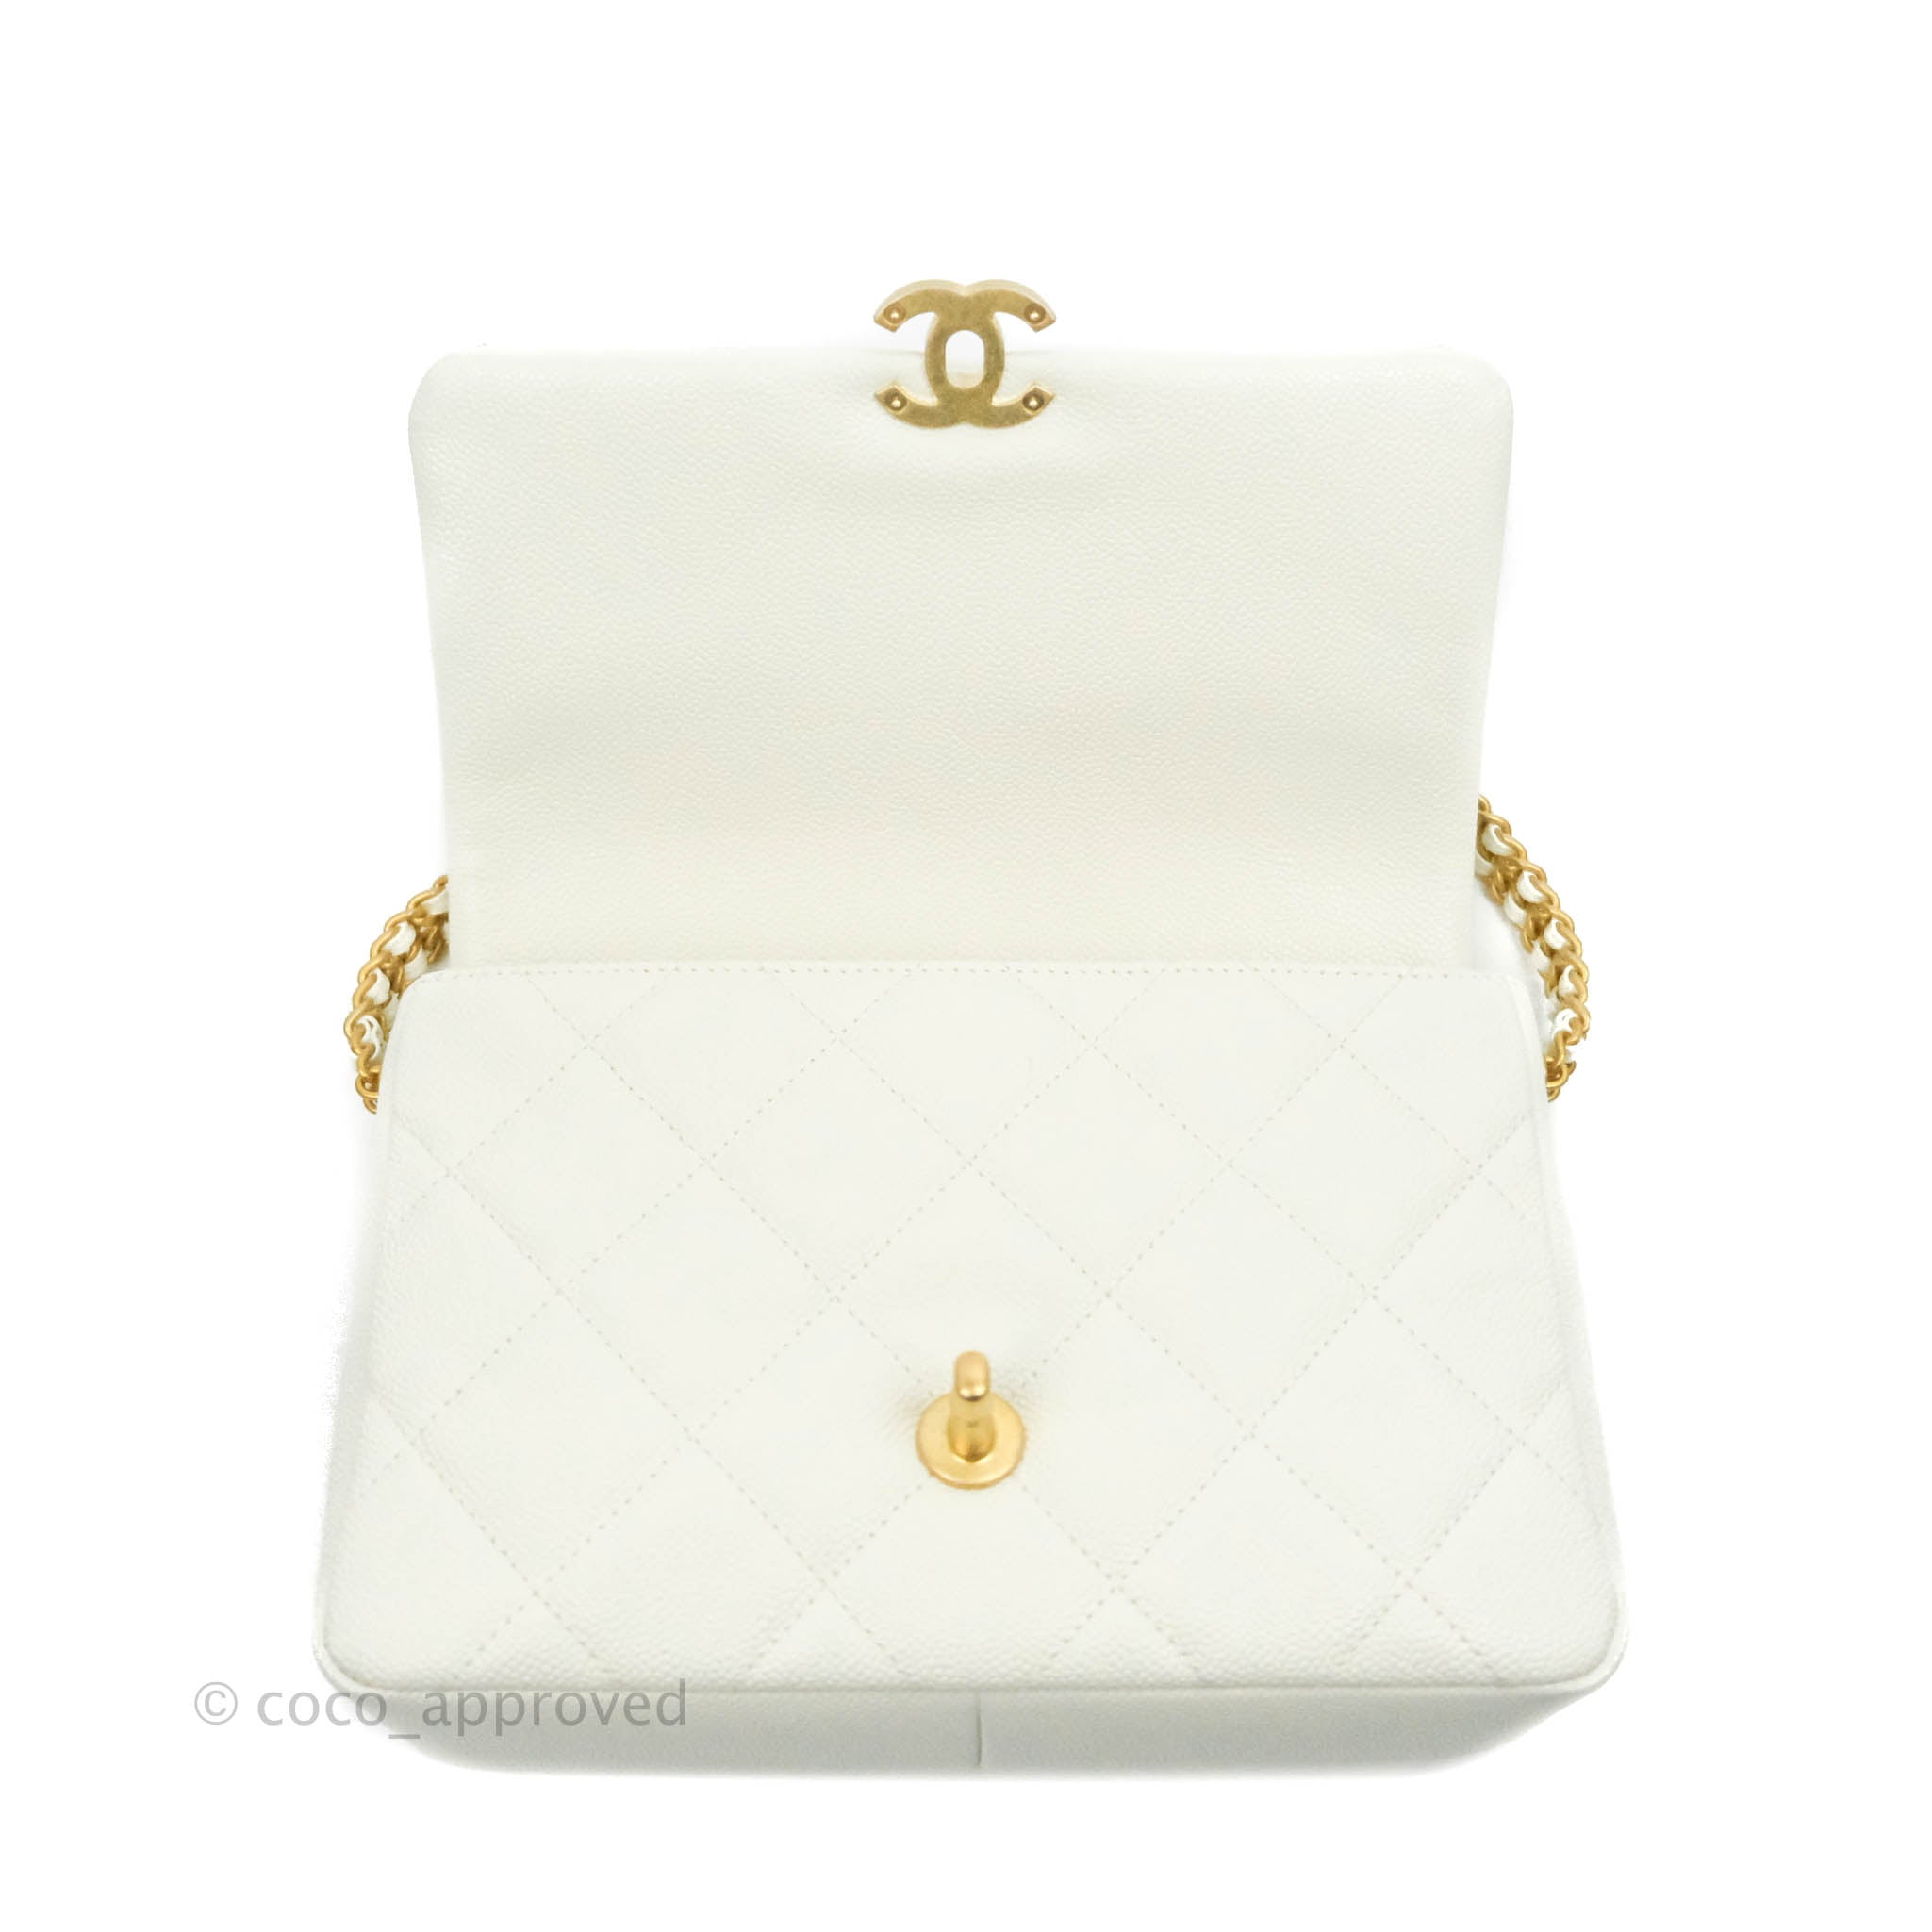 Chanel 22 Mini, White with Gold Hardware, New in Box GA006